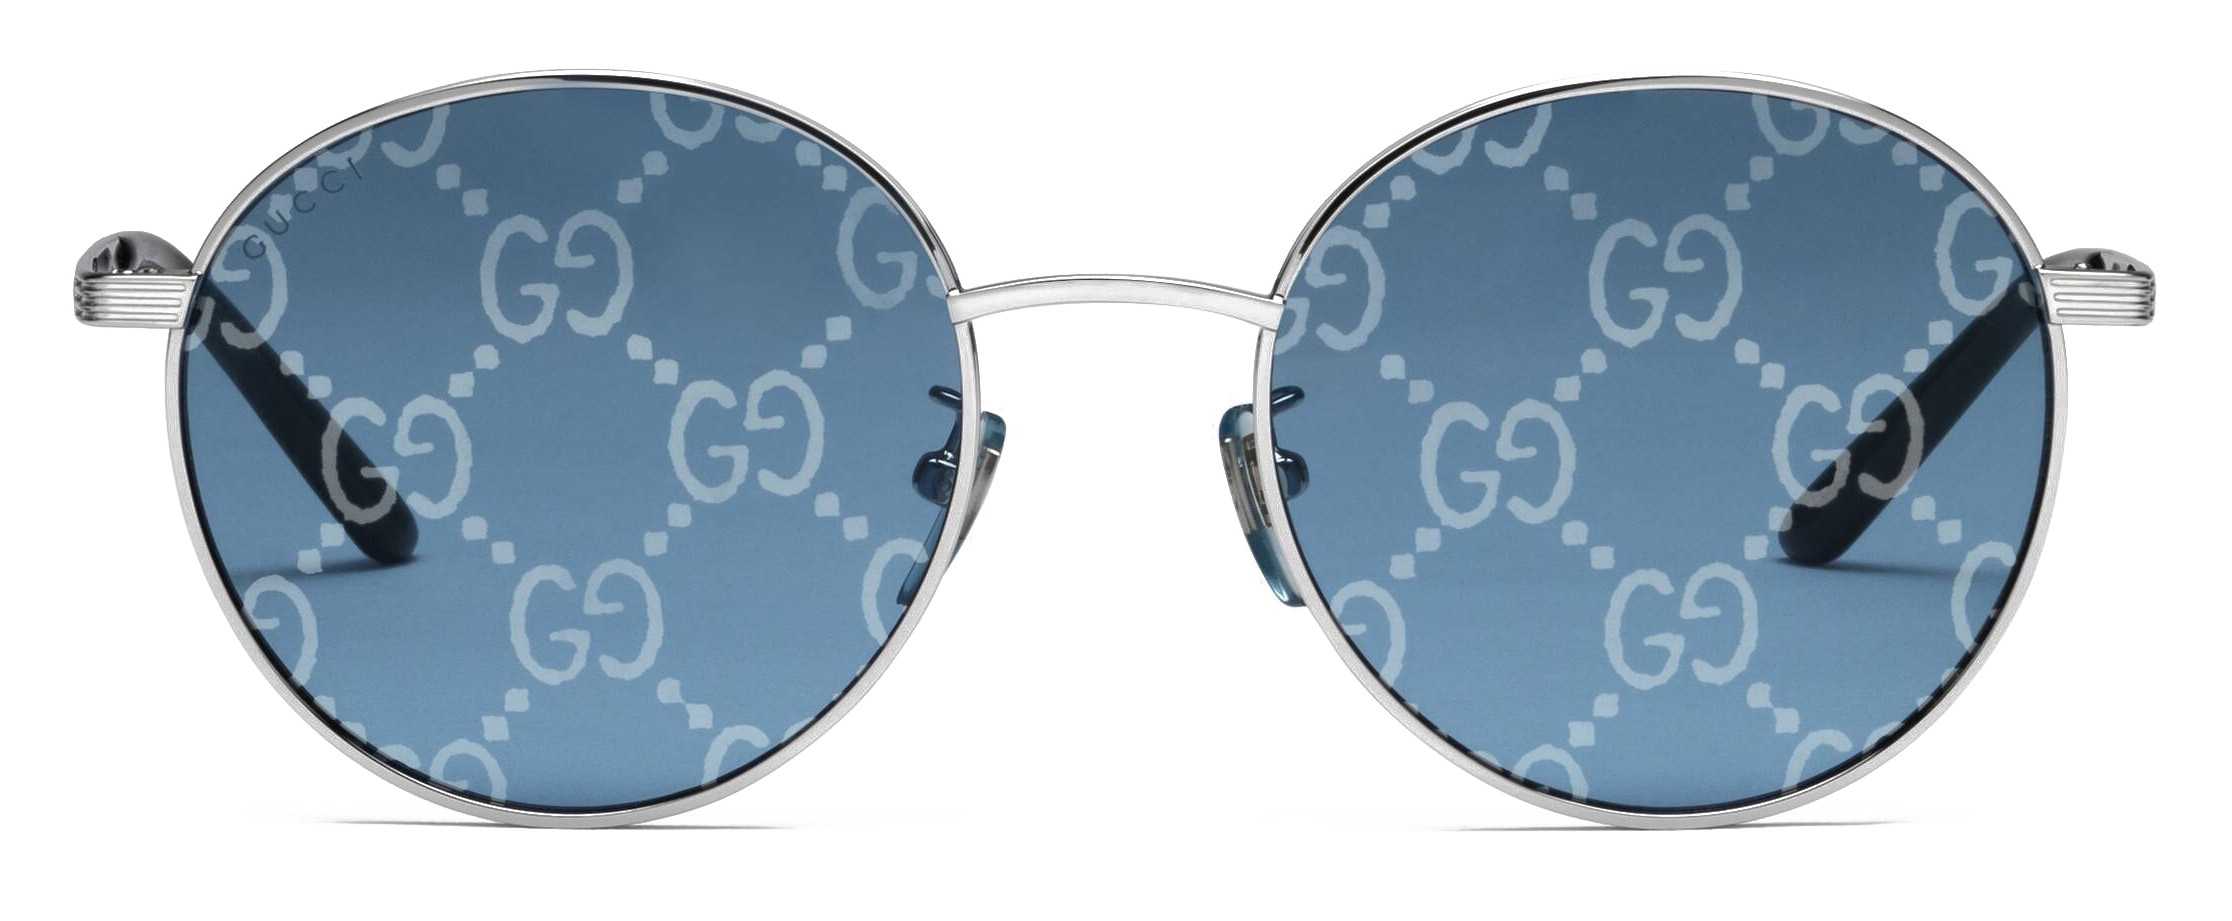 Gucci Eyewear GG-monogram square-frame Sunglasses - Blue